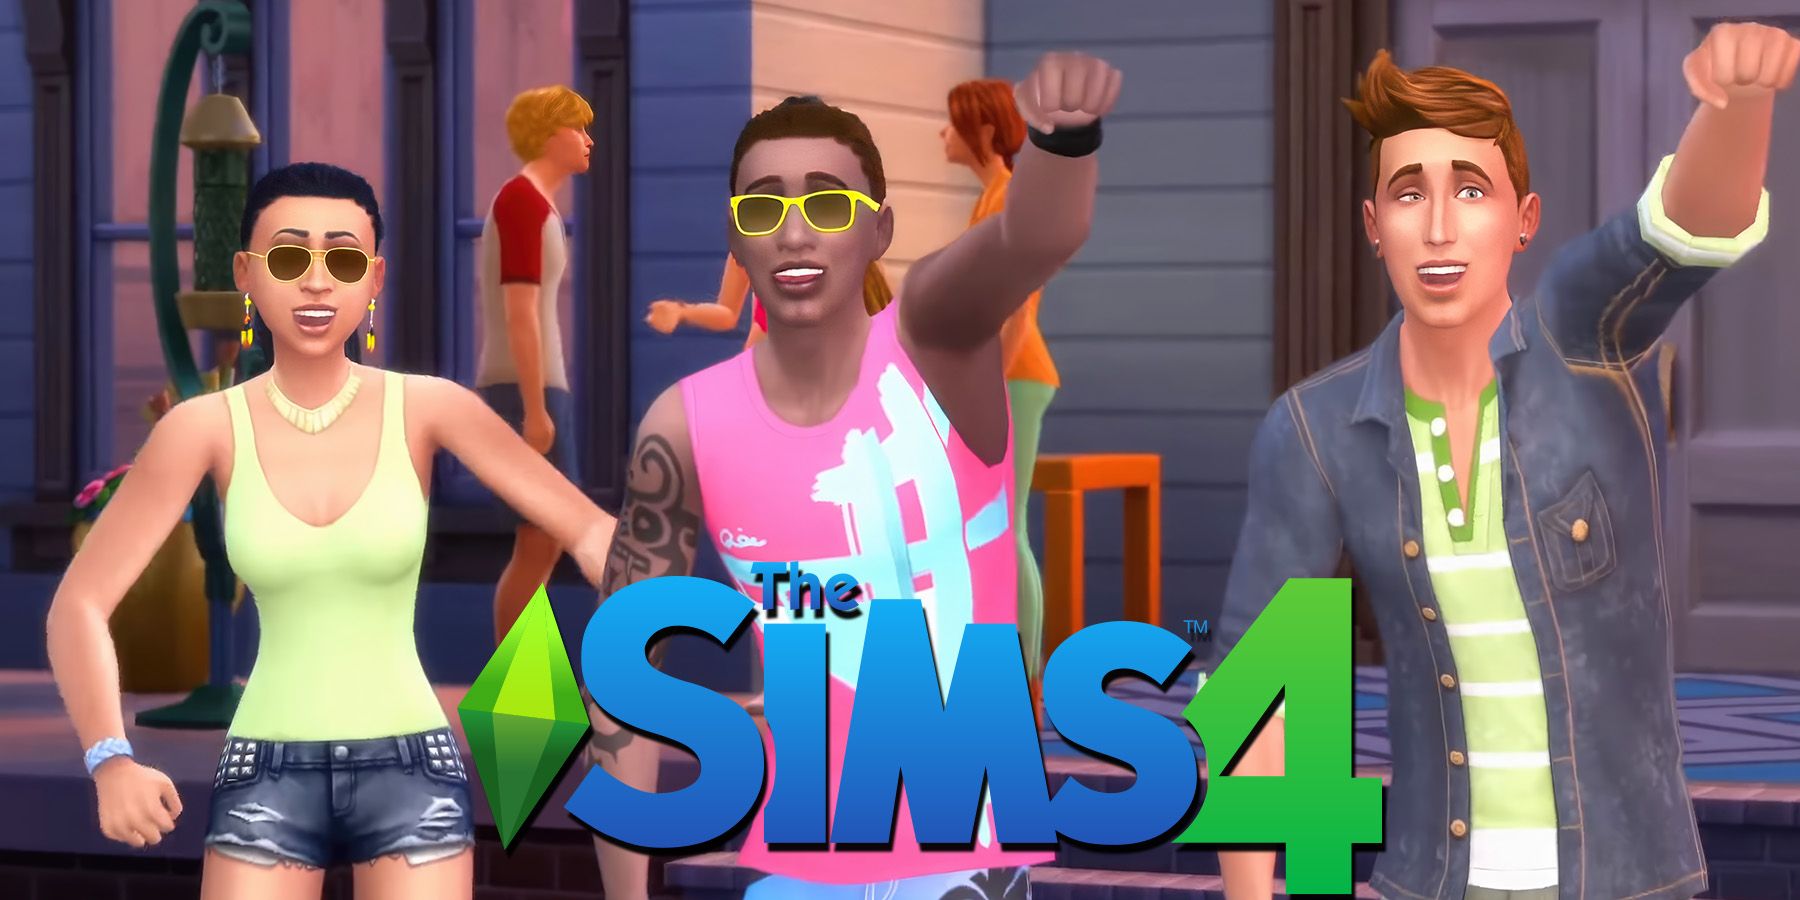 The Sims 4 Backyard Stuff trailer three sims cheering next to game logo upscaled screenshot